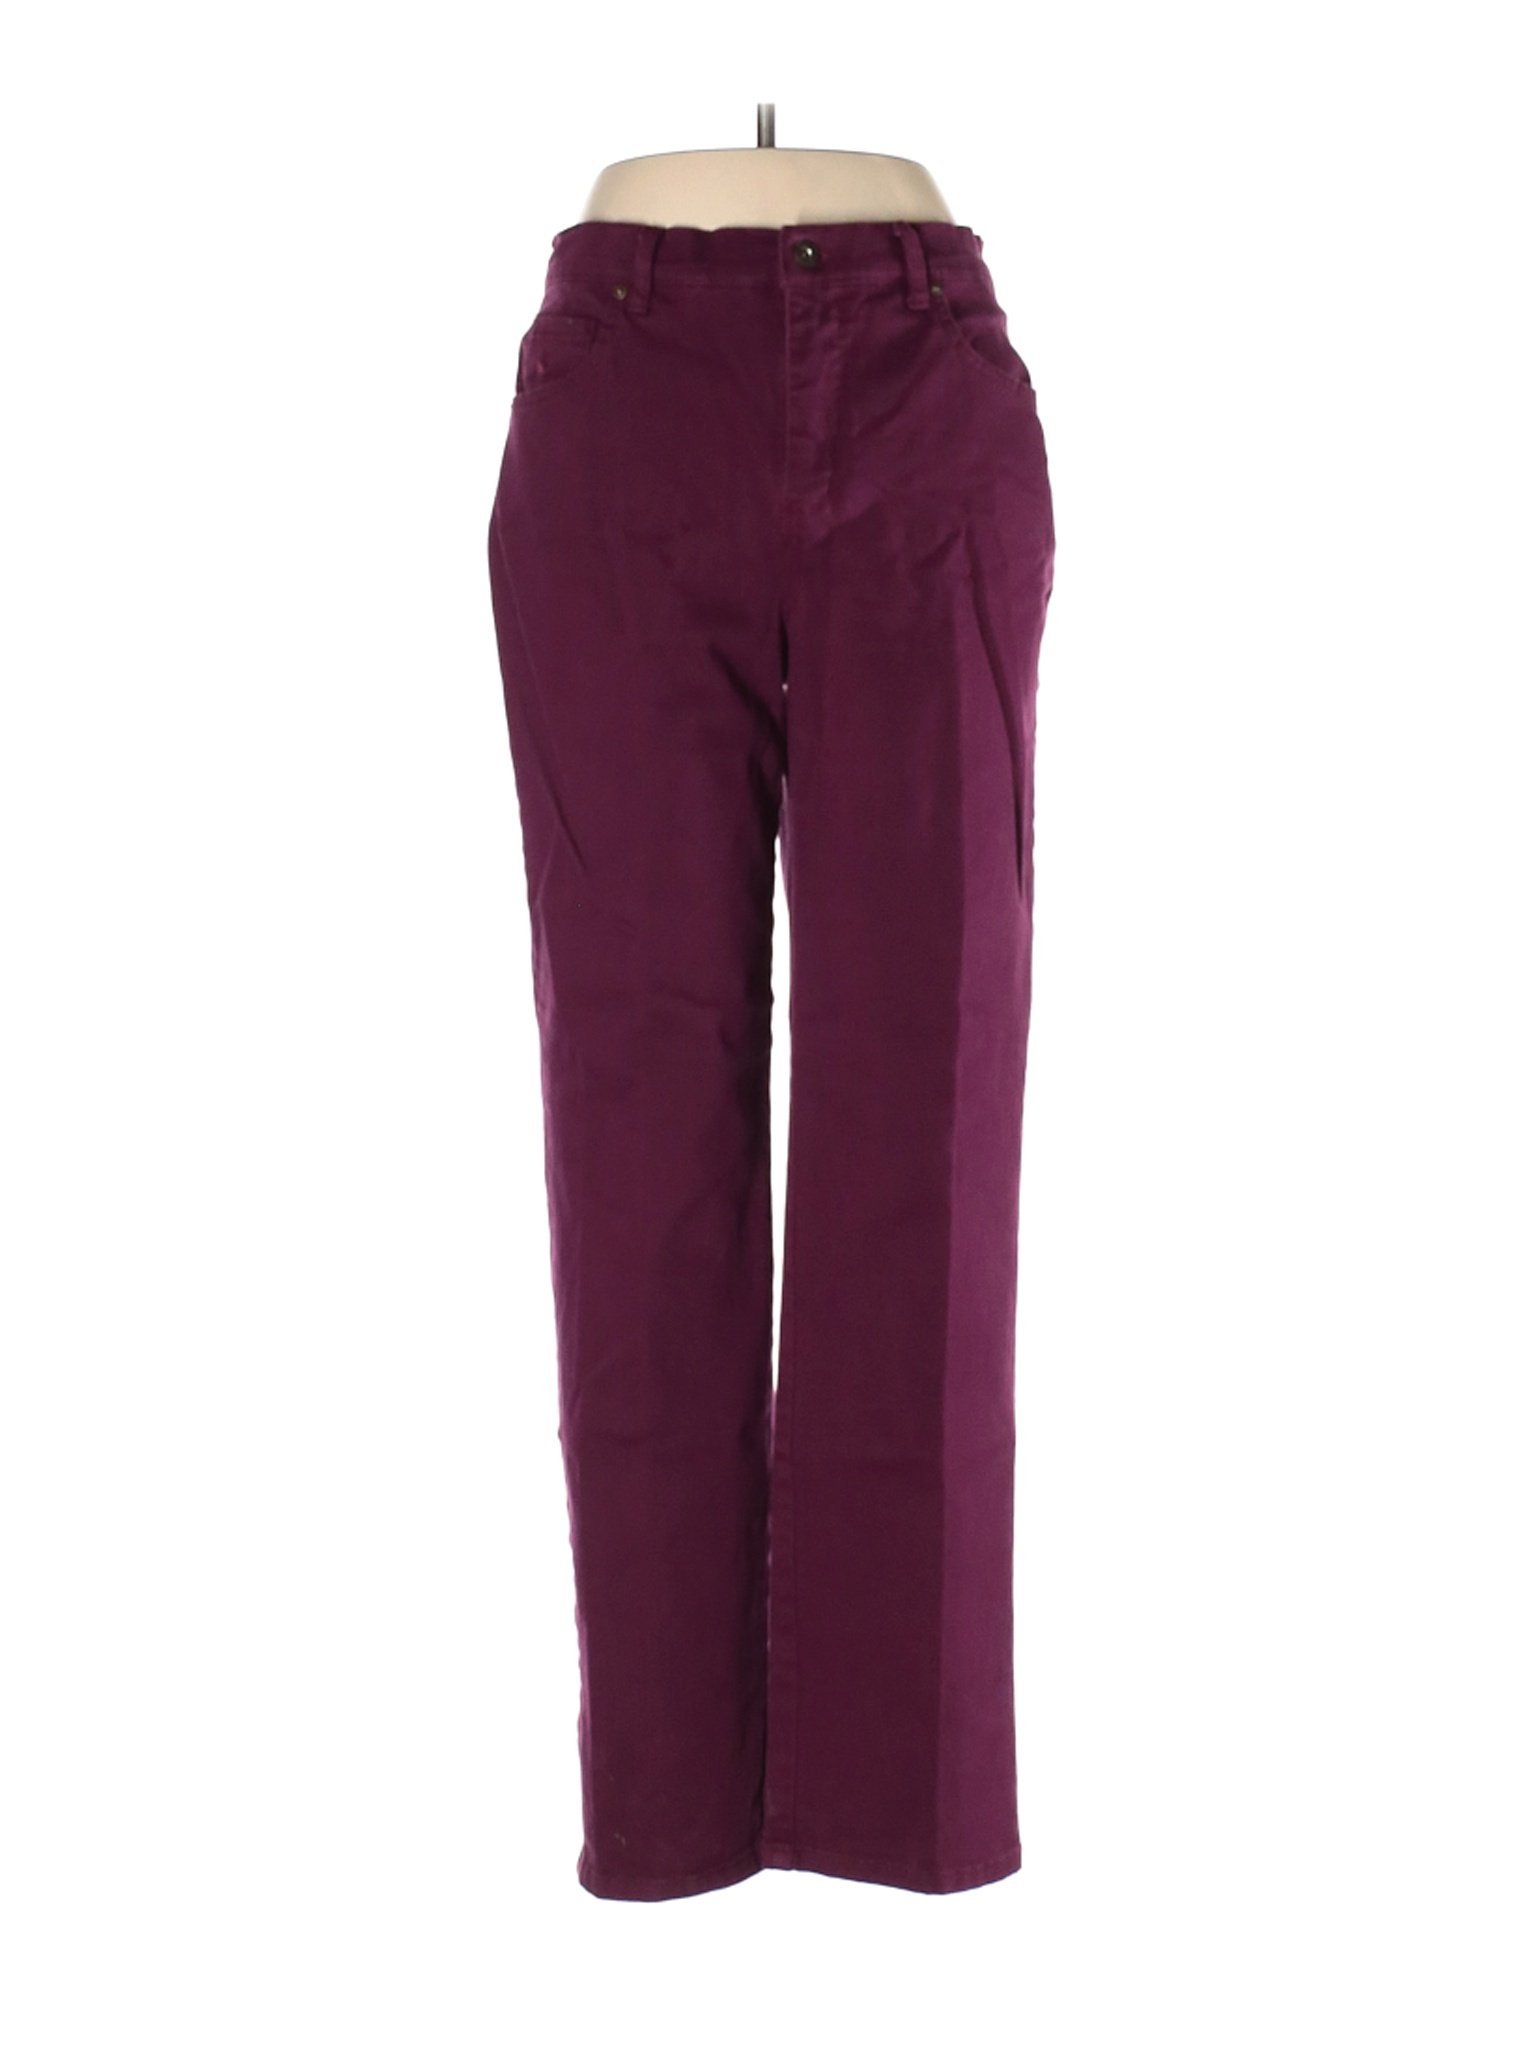 Gloria Vanderbilt Women Purple Jeans 8 | eBay